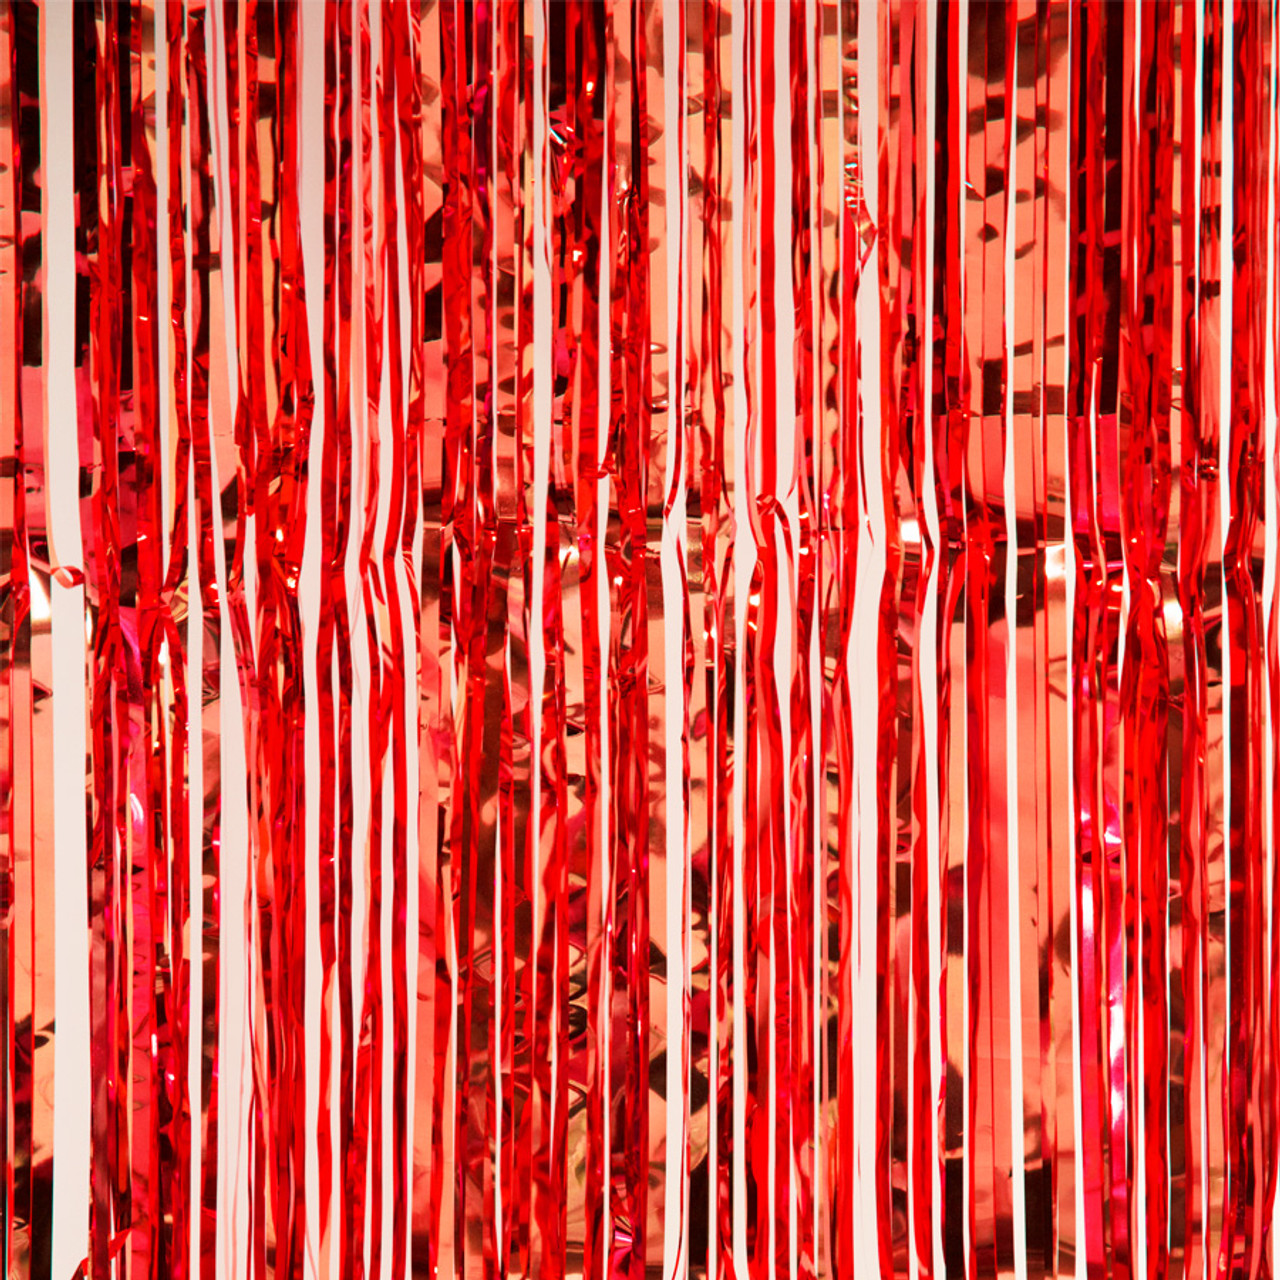 Red Metallic Shiny Foil Fringe Column 8' Long Party Ceiling Decoration